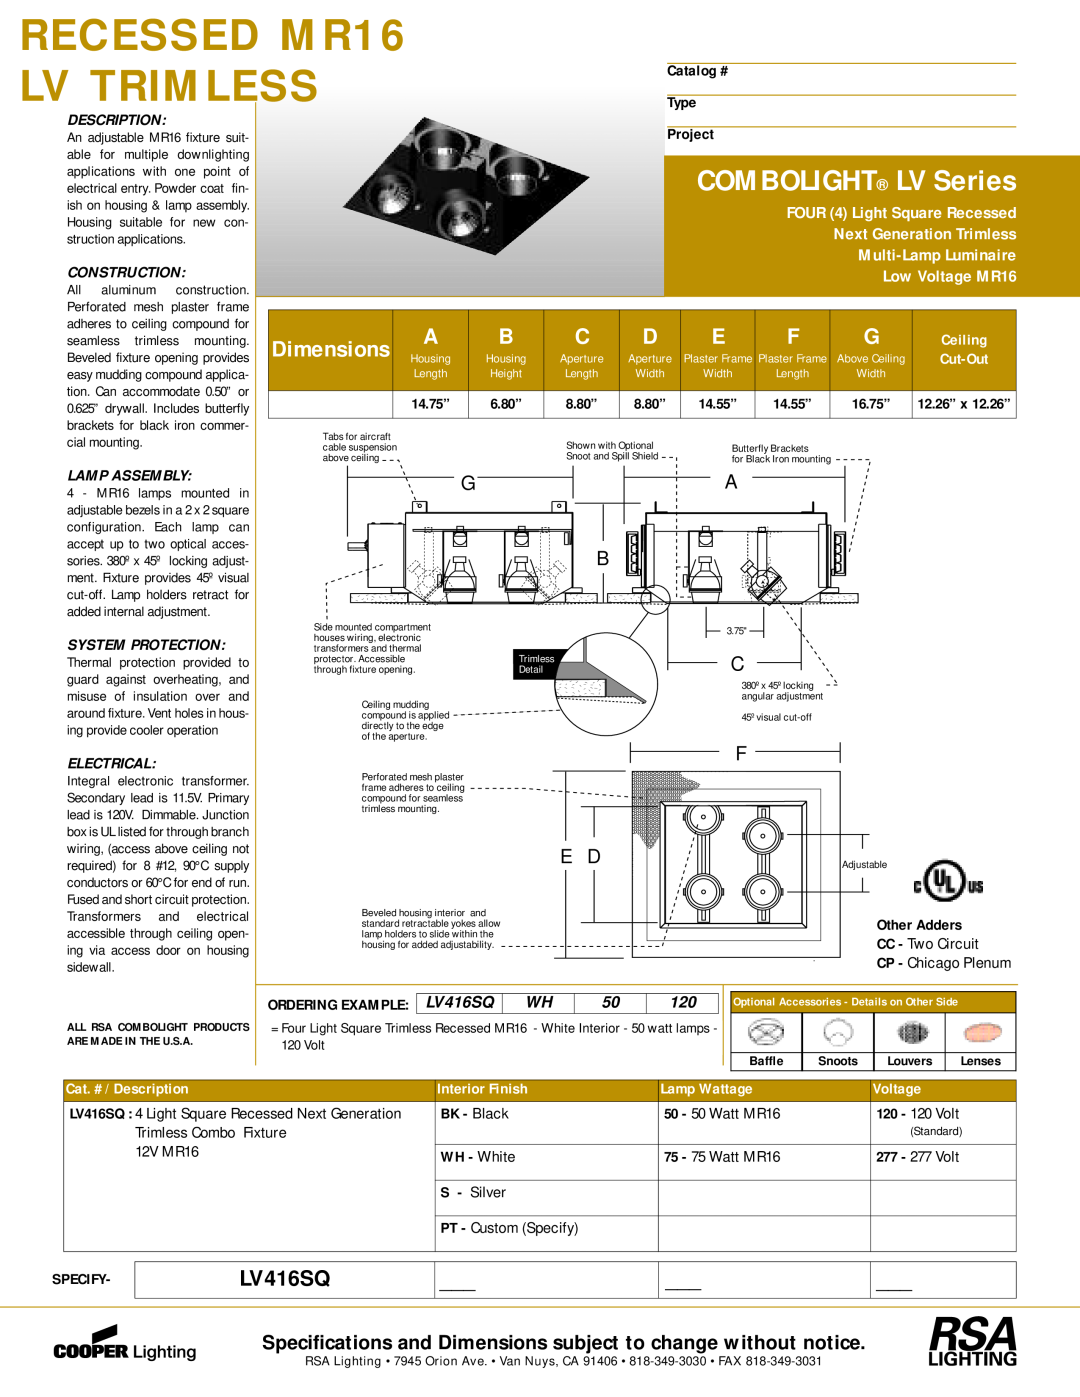 Cooper Lighting LV416SQ dimensions RECESSED MR16, Lv Trimless, COMBOLIGHT LV Series, Dimensions 